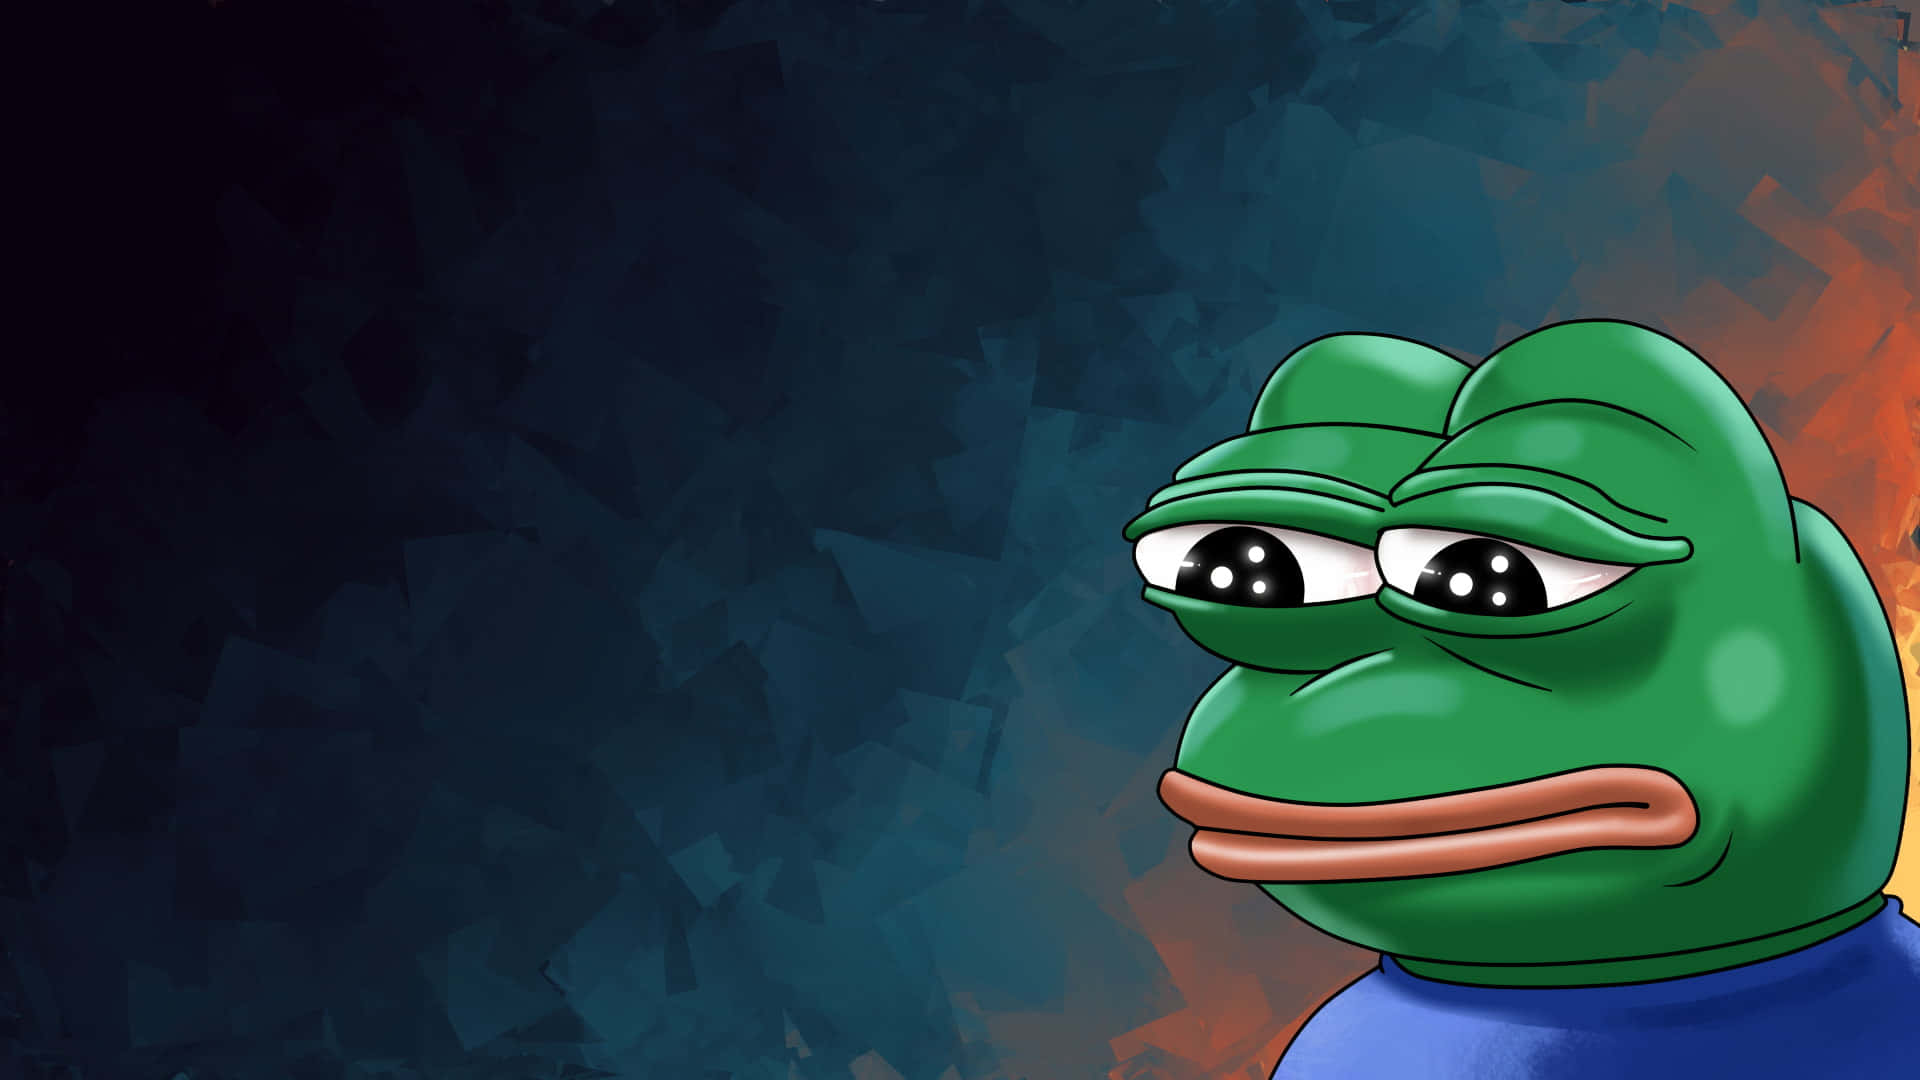 sad meme face frog